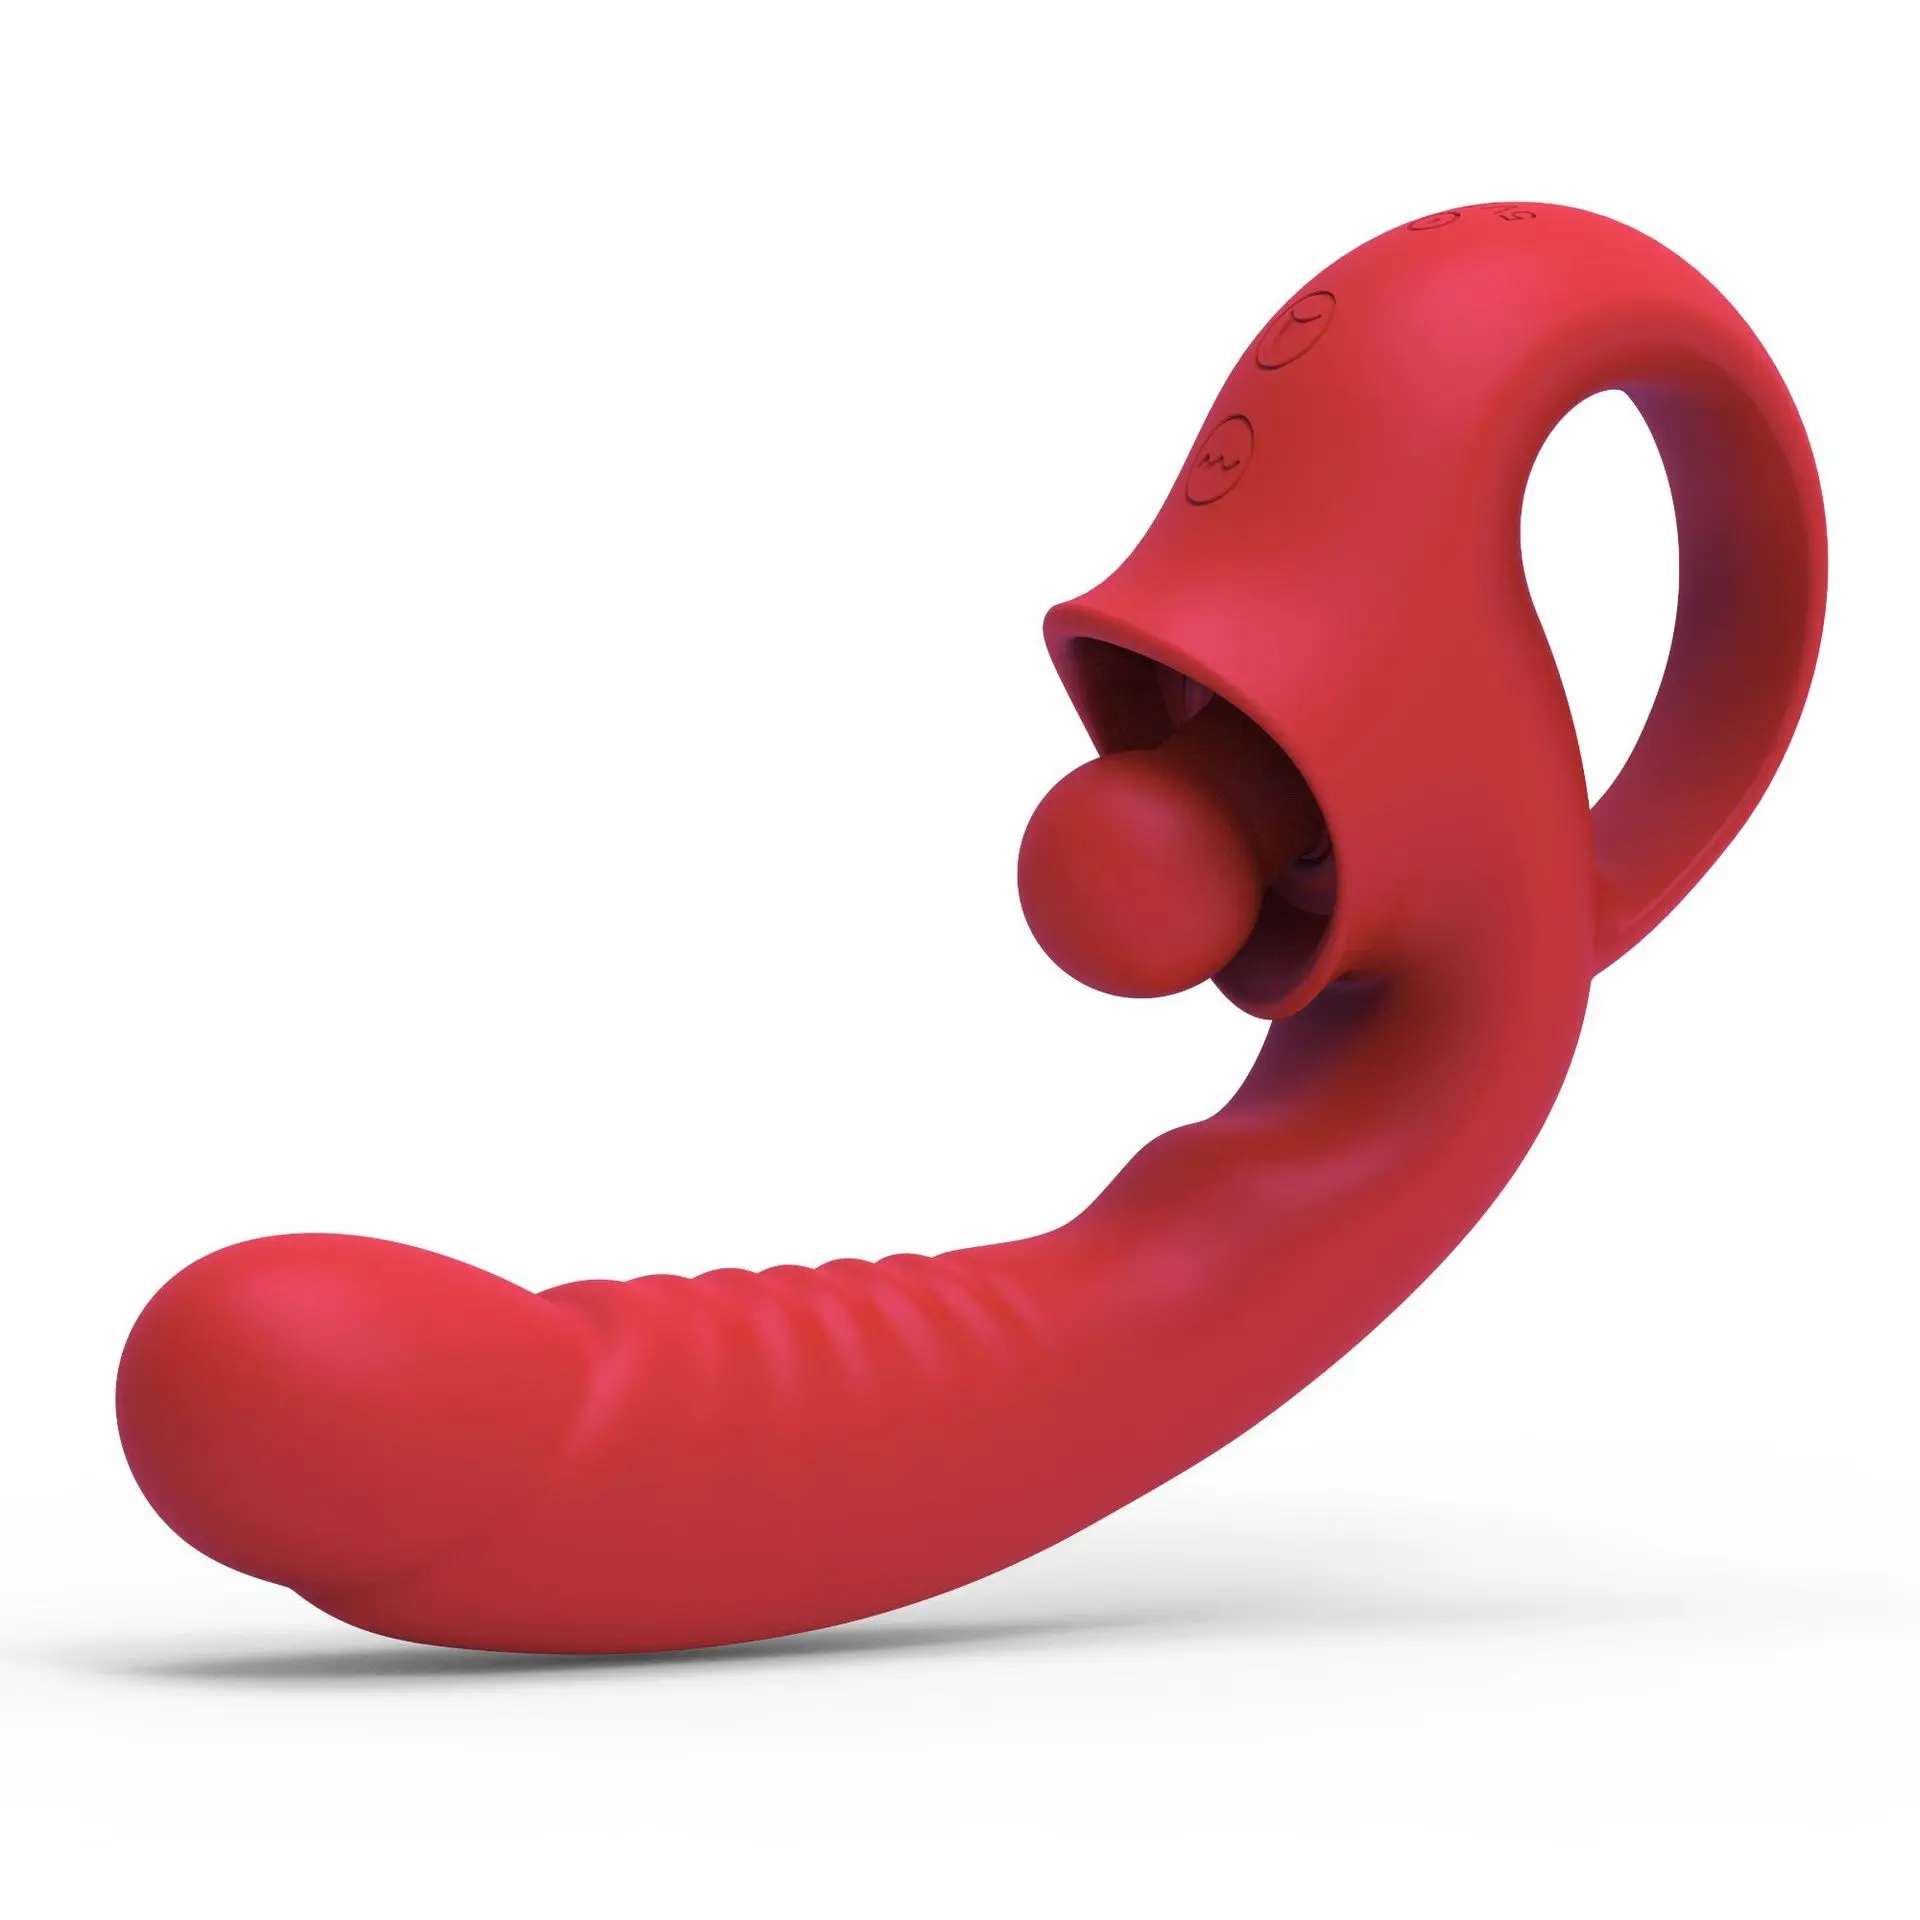 2023 língua língua lambendo vibrador feminino juguetes sexuals dildos adulto vibrando brinquedos para as mulheres buceta vagina língua vibrador